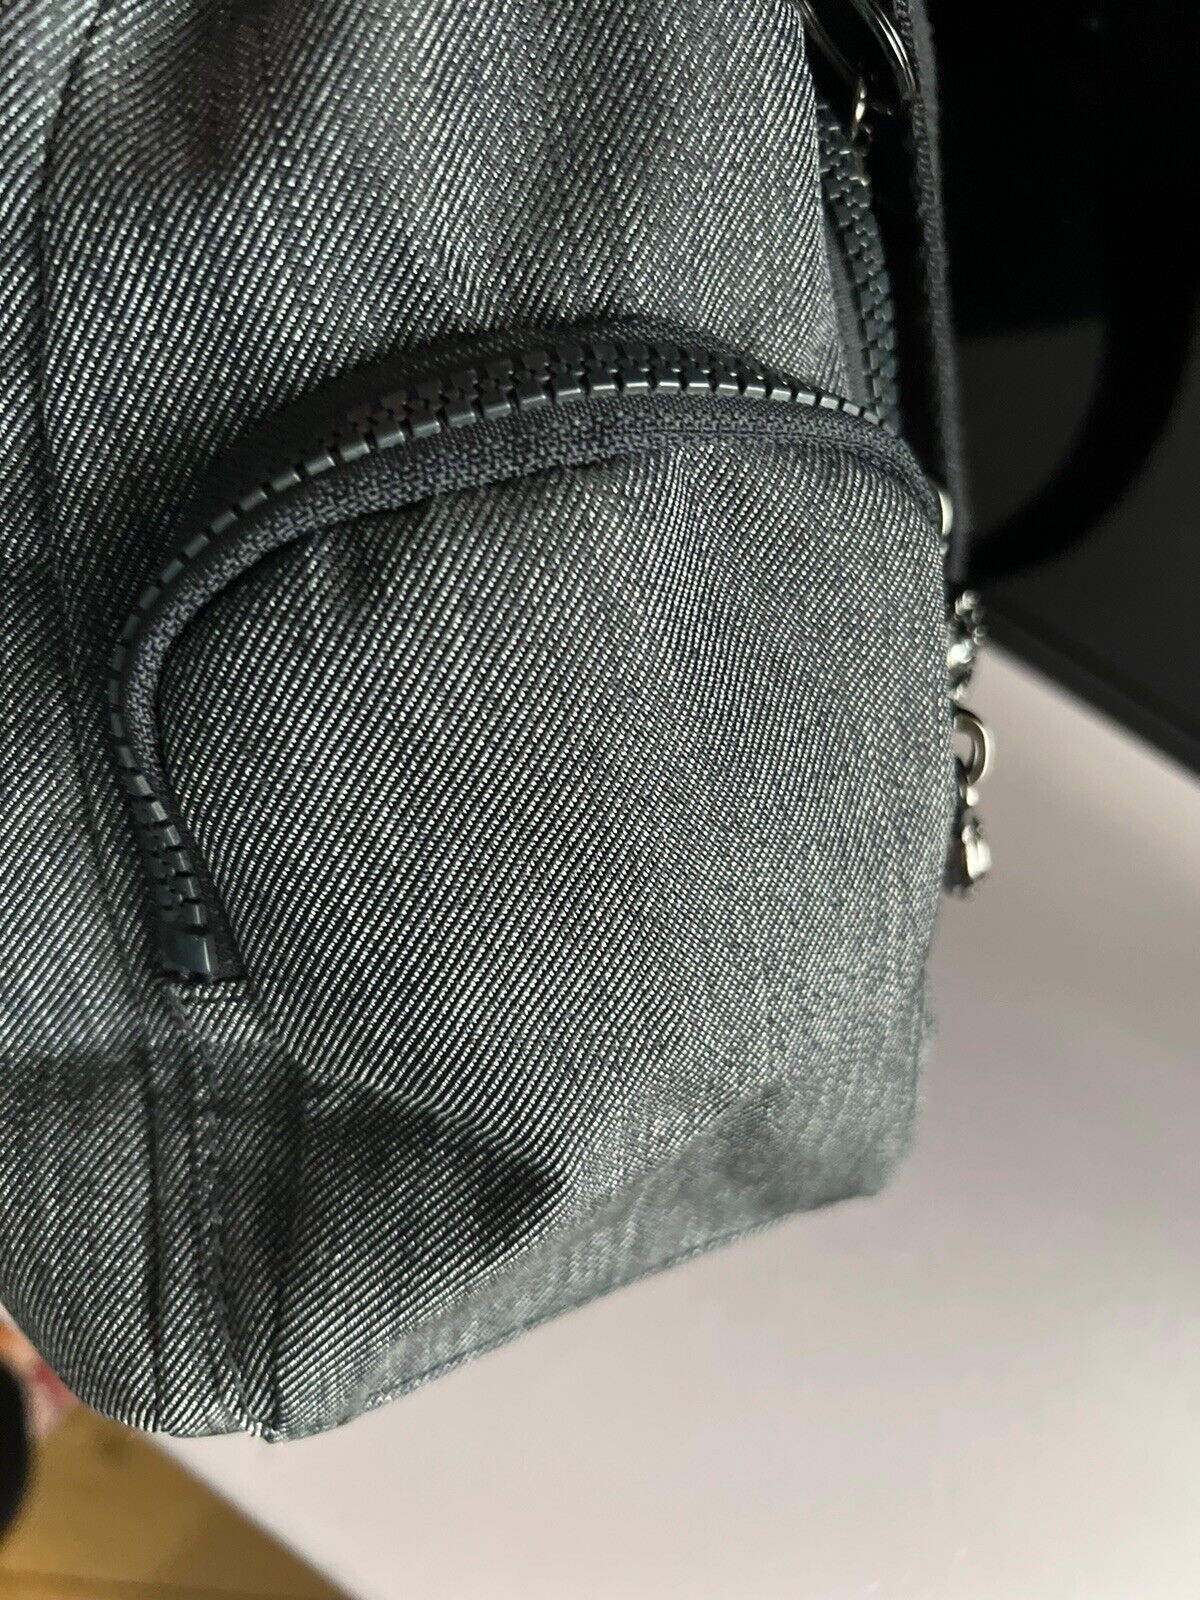 Kipling Gabbie S Cross Body Bag | eBay